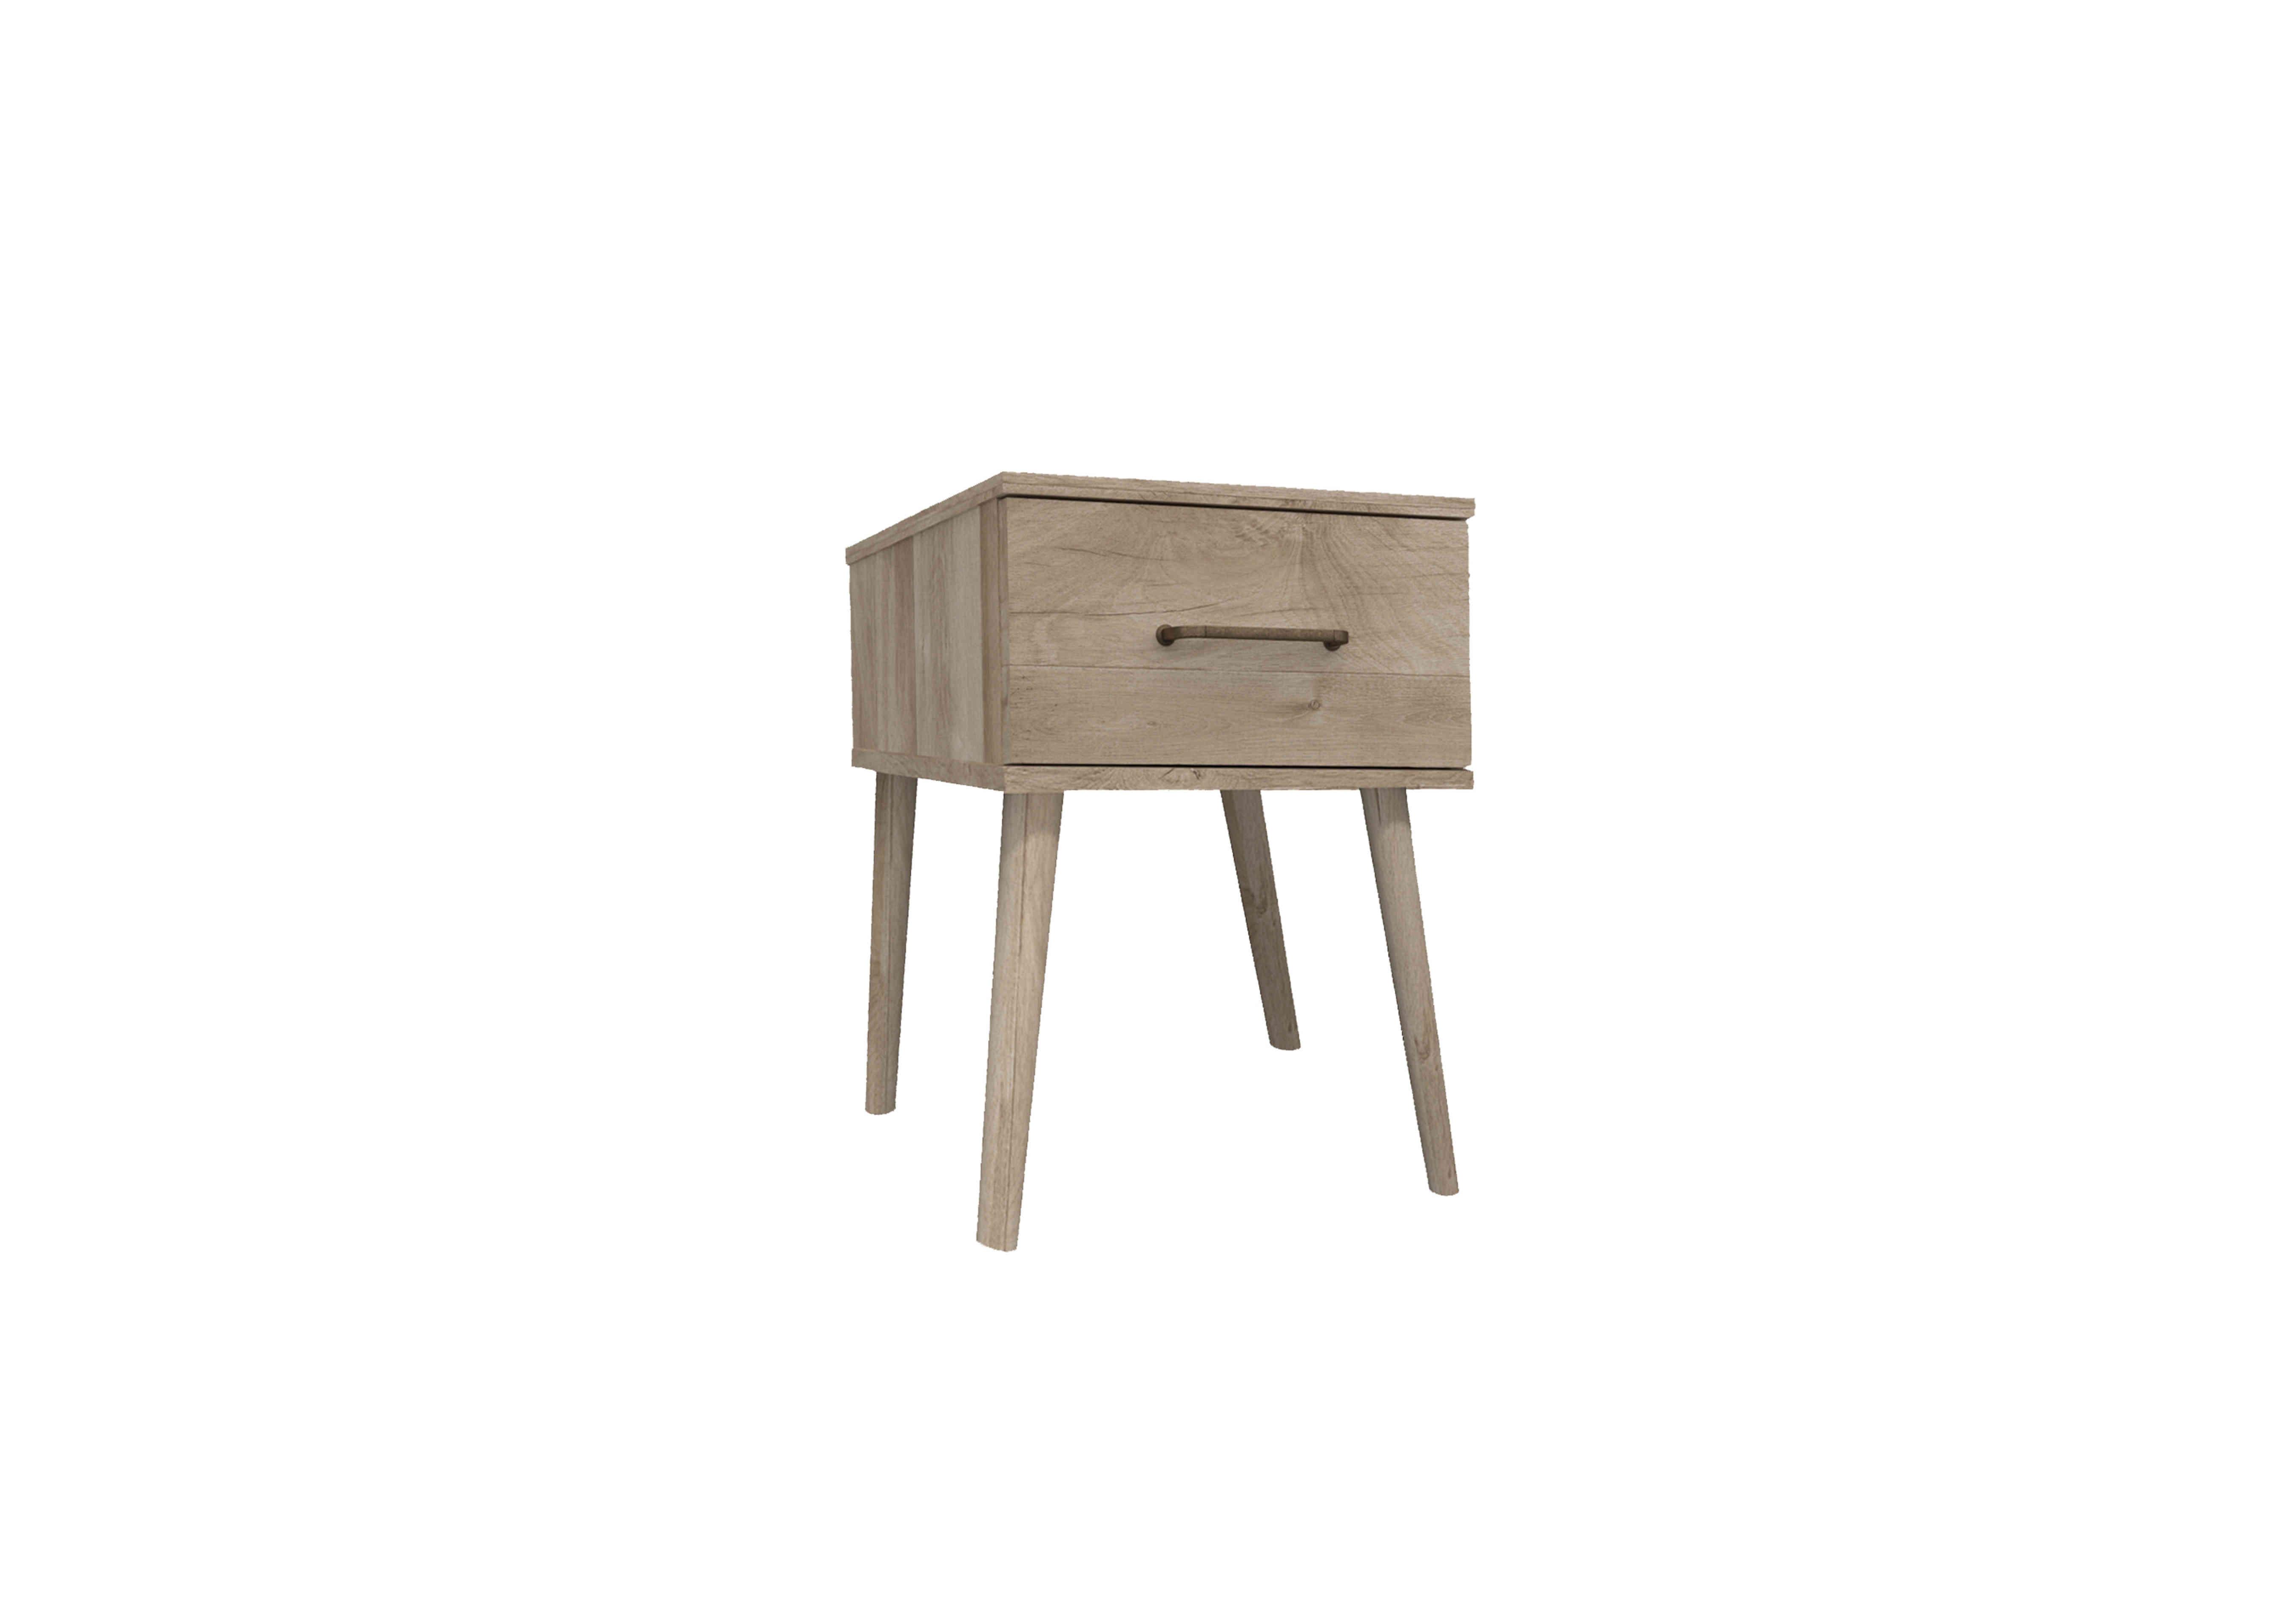 Finchley 1 Drawer Bedside Cabinet in Italian Natural Oak on Furniture Village